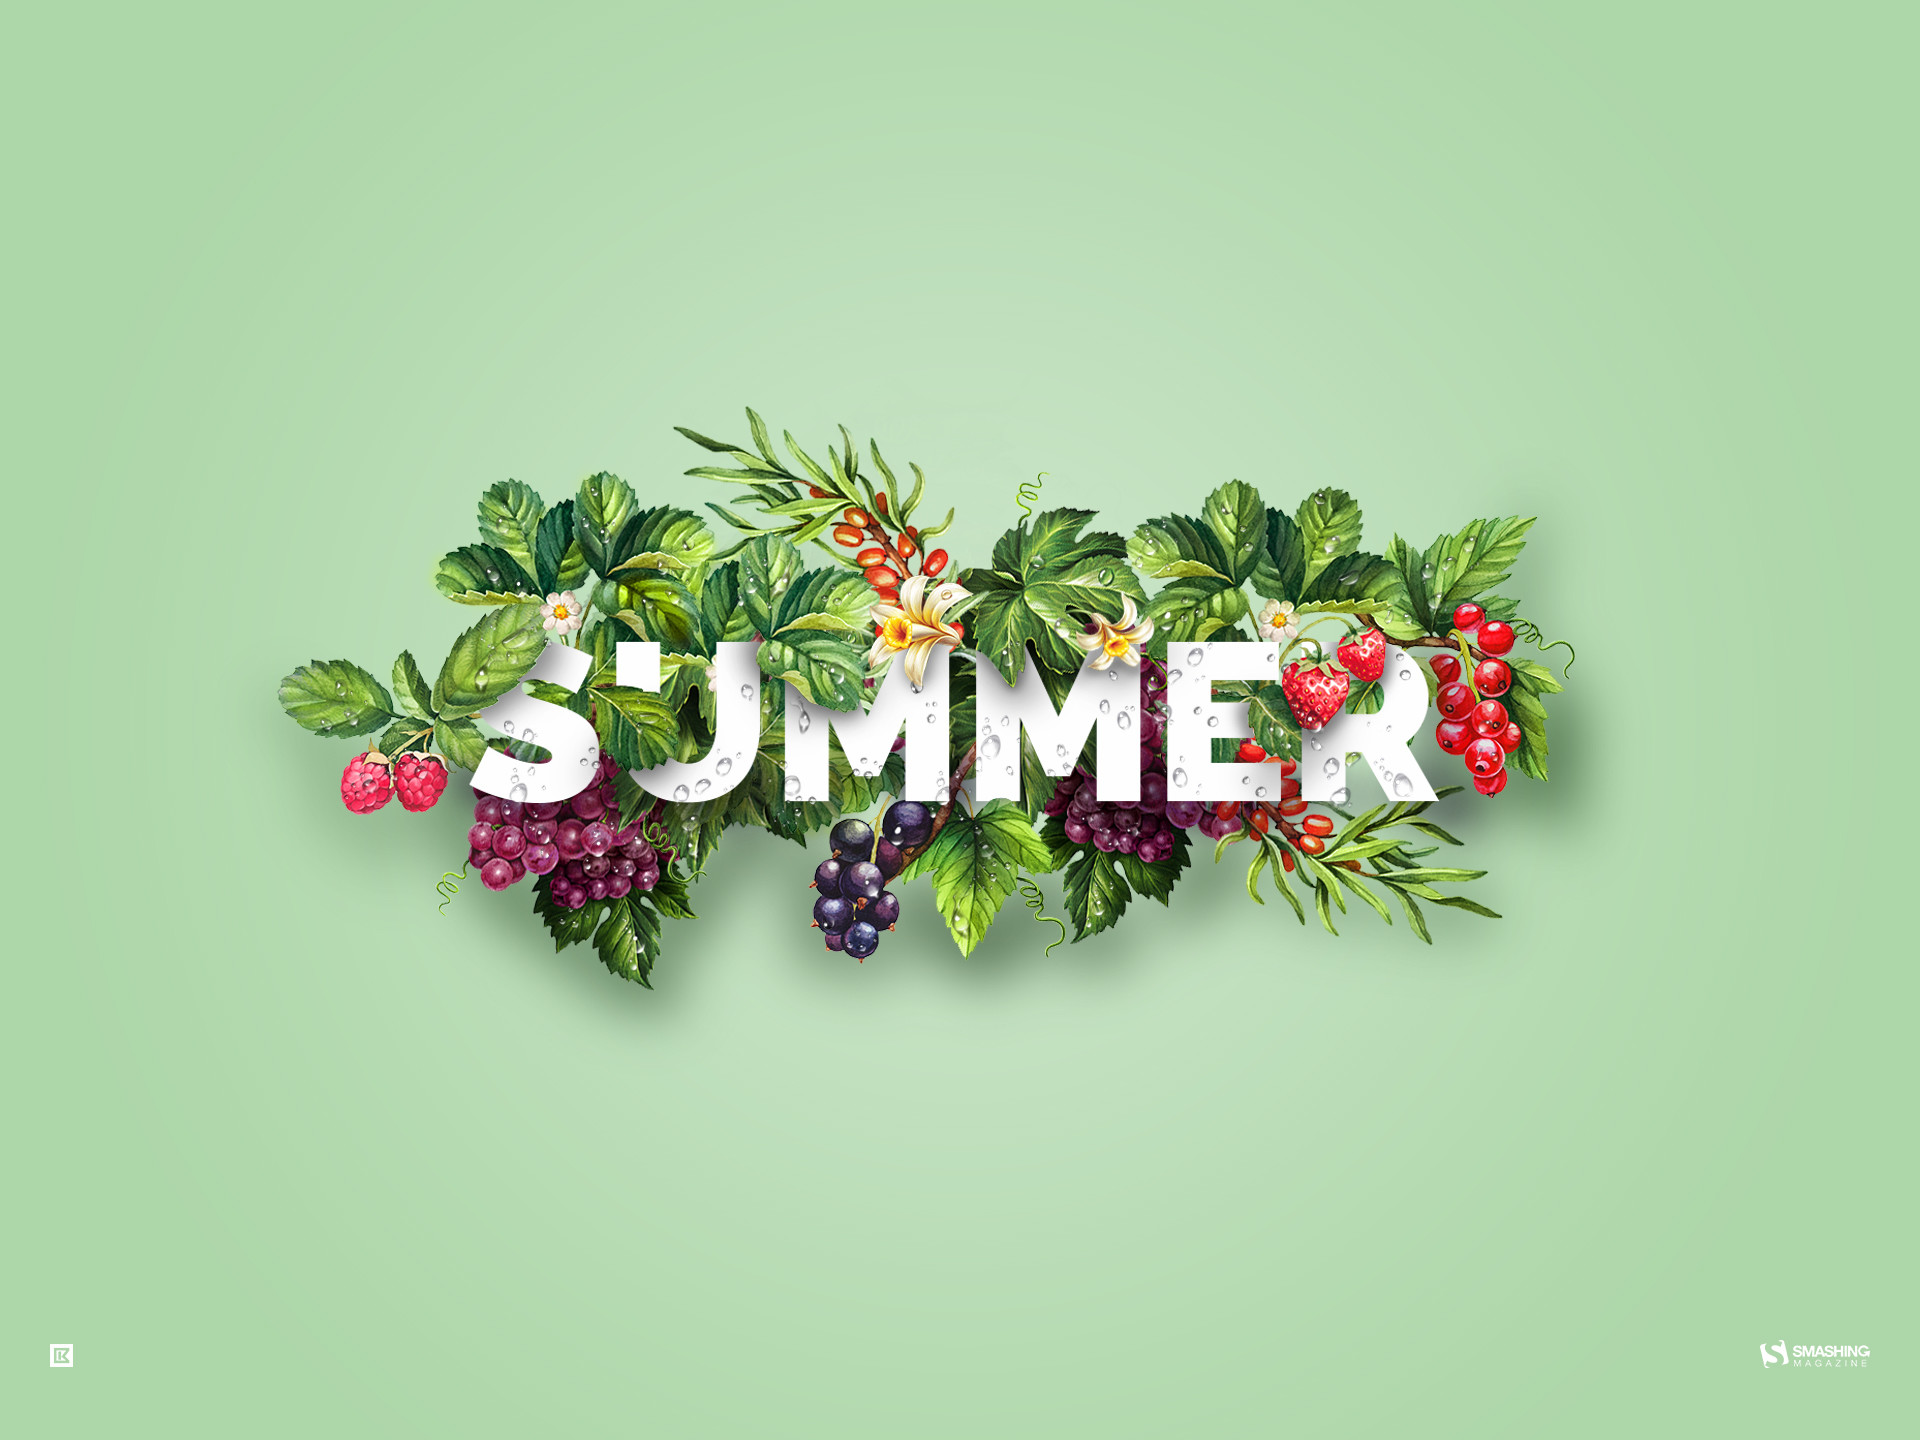 1920x1440 may-16-a-sweet-test-of-summer-nocal-.jpg (1920Ã1440) | diseÃ±o |  Pinterest | Wallpaper and Unique wallpaper